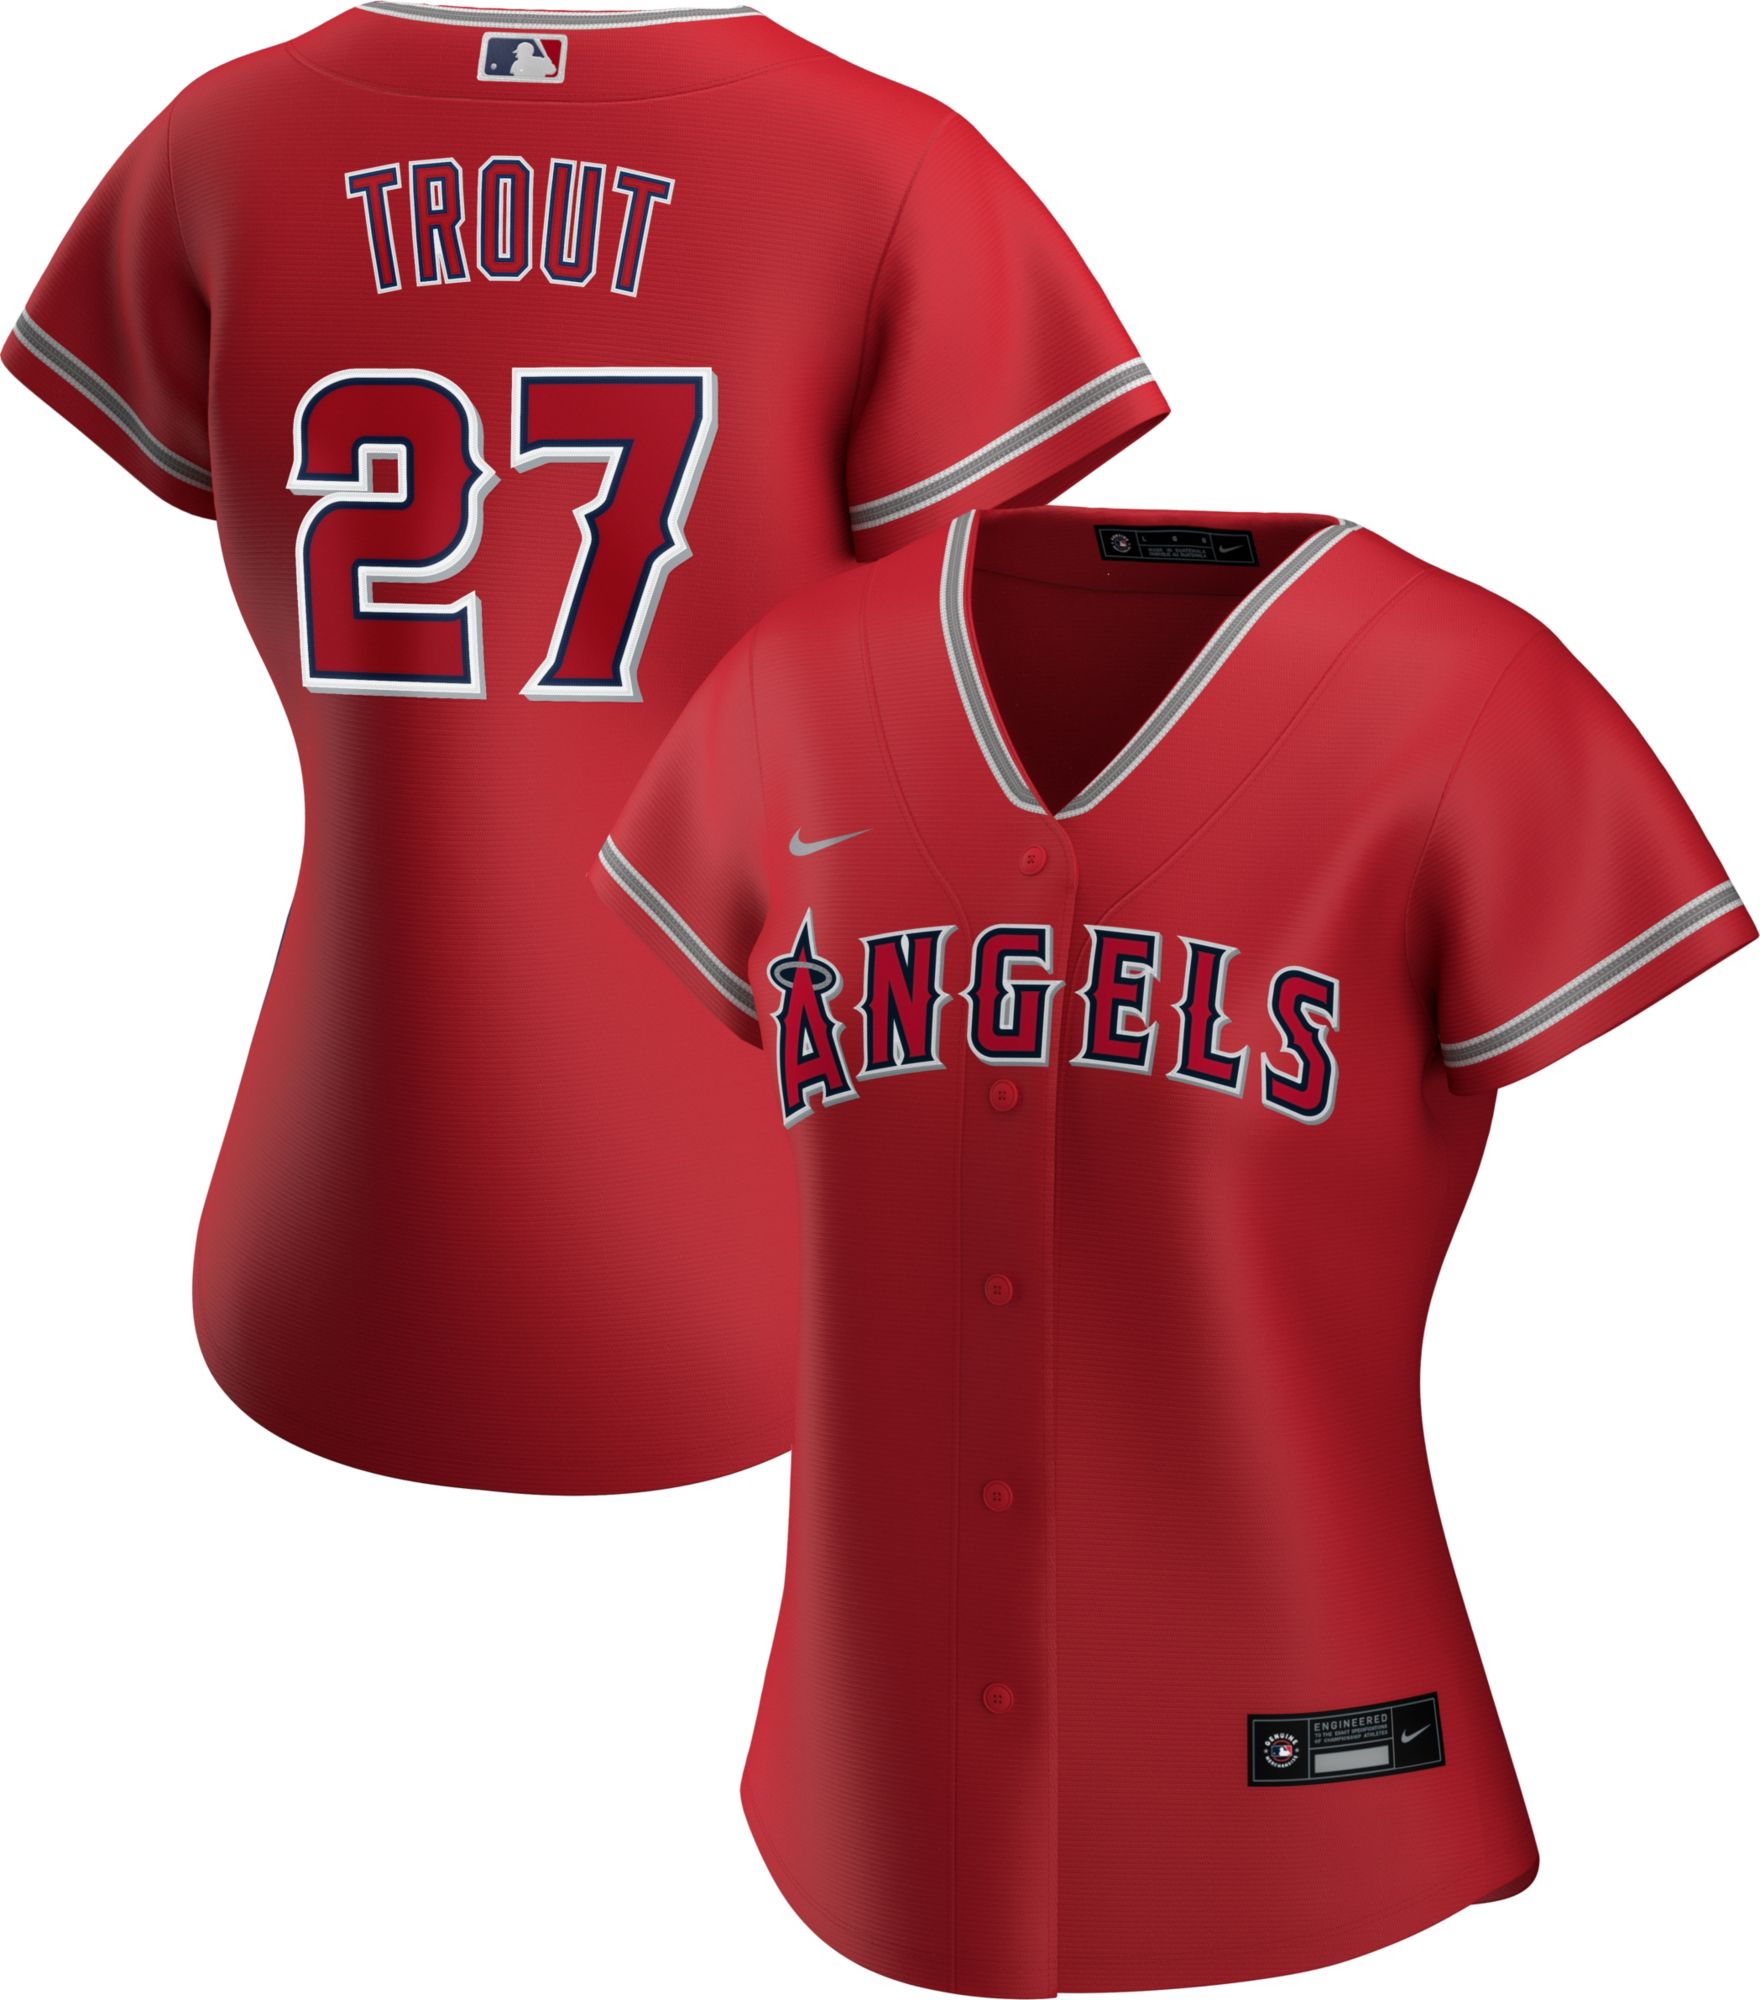 Los Angeles Angels jerseys